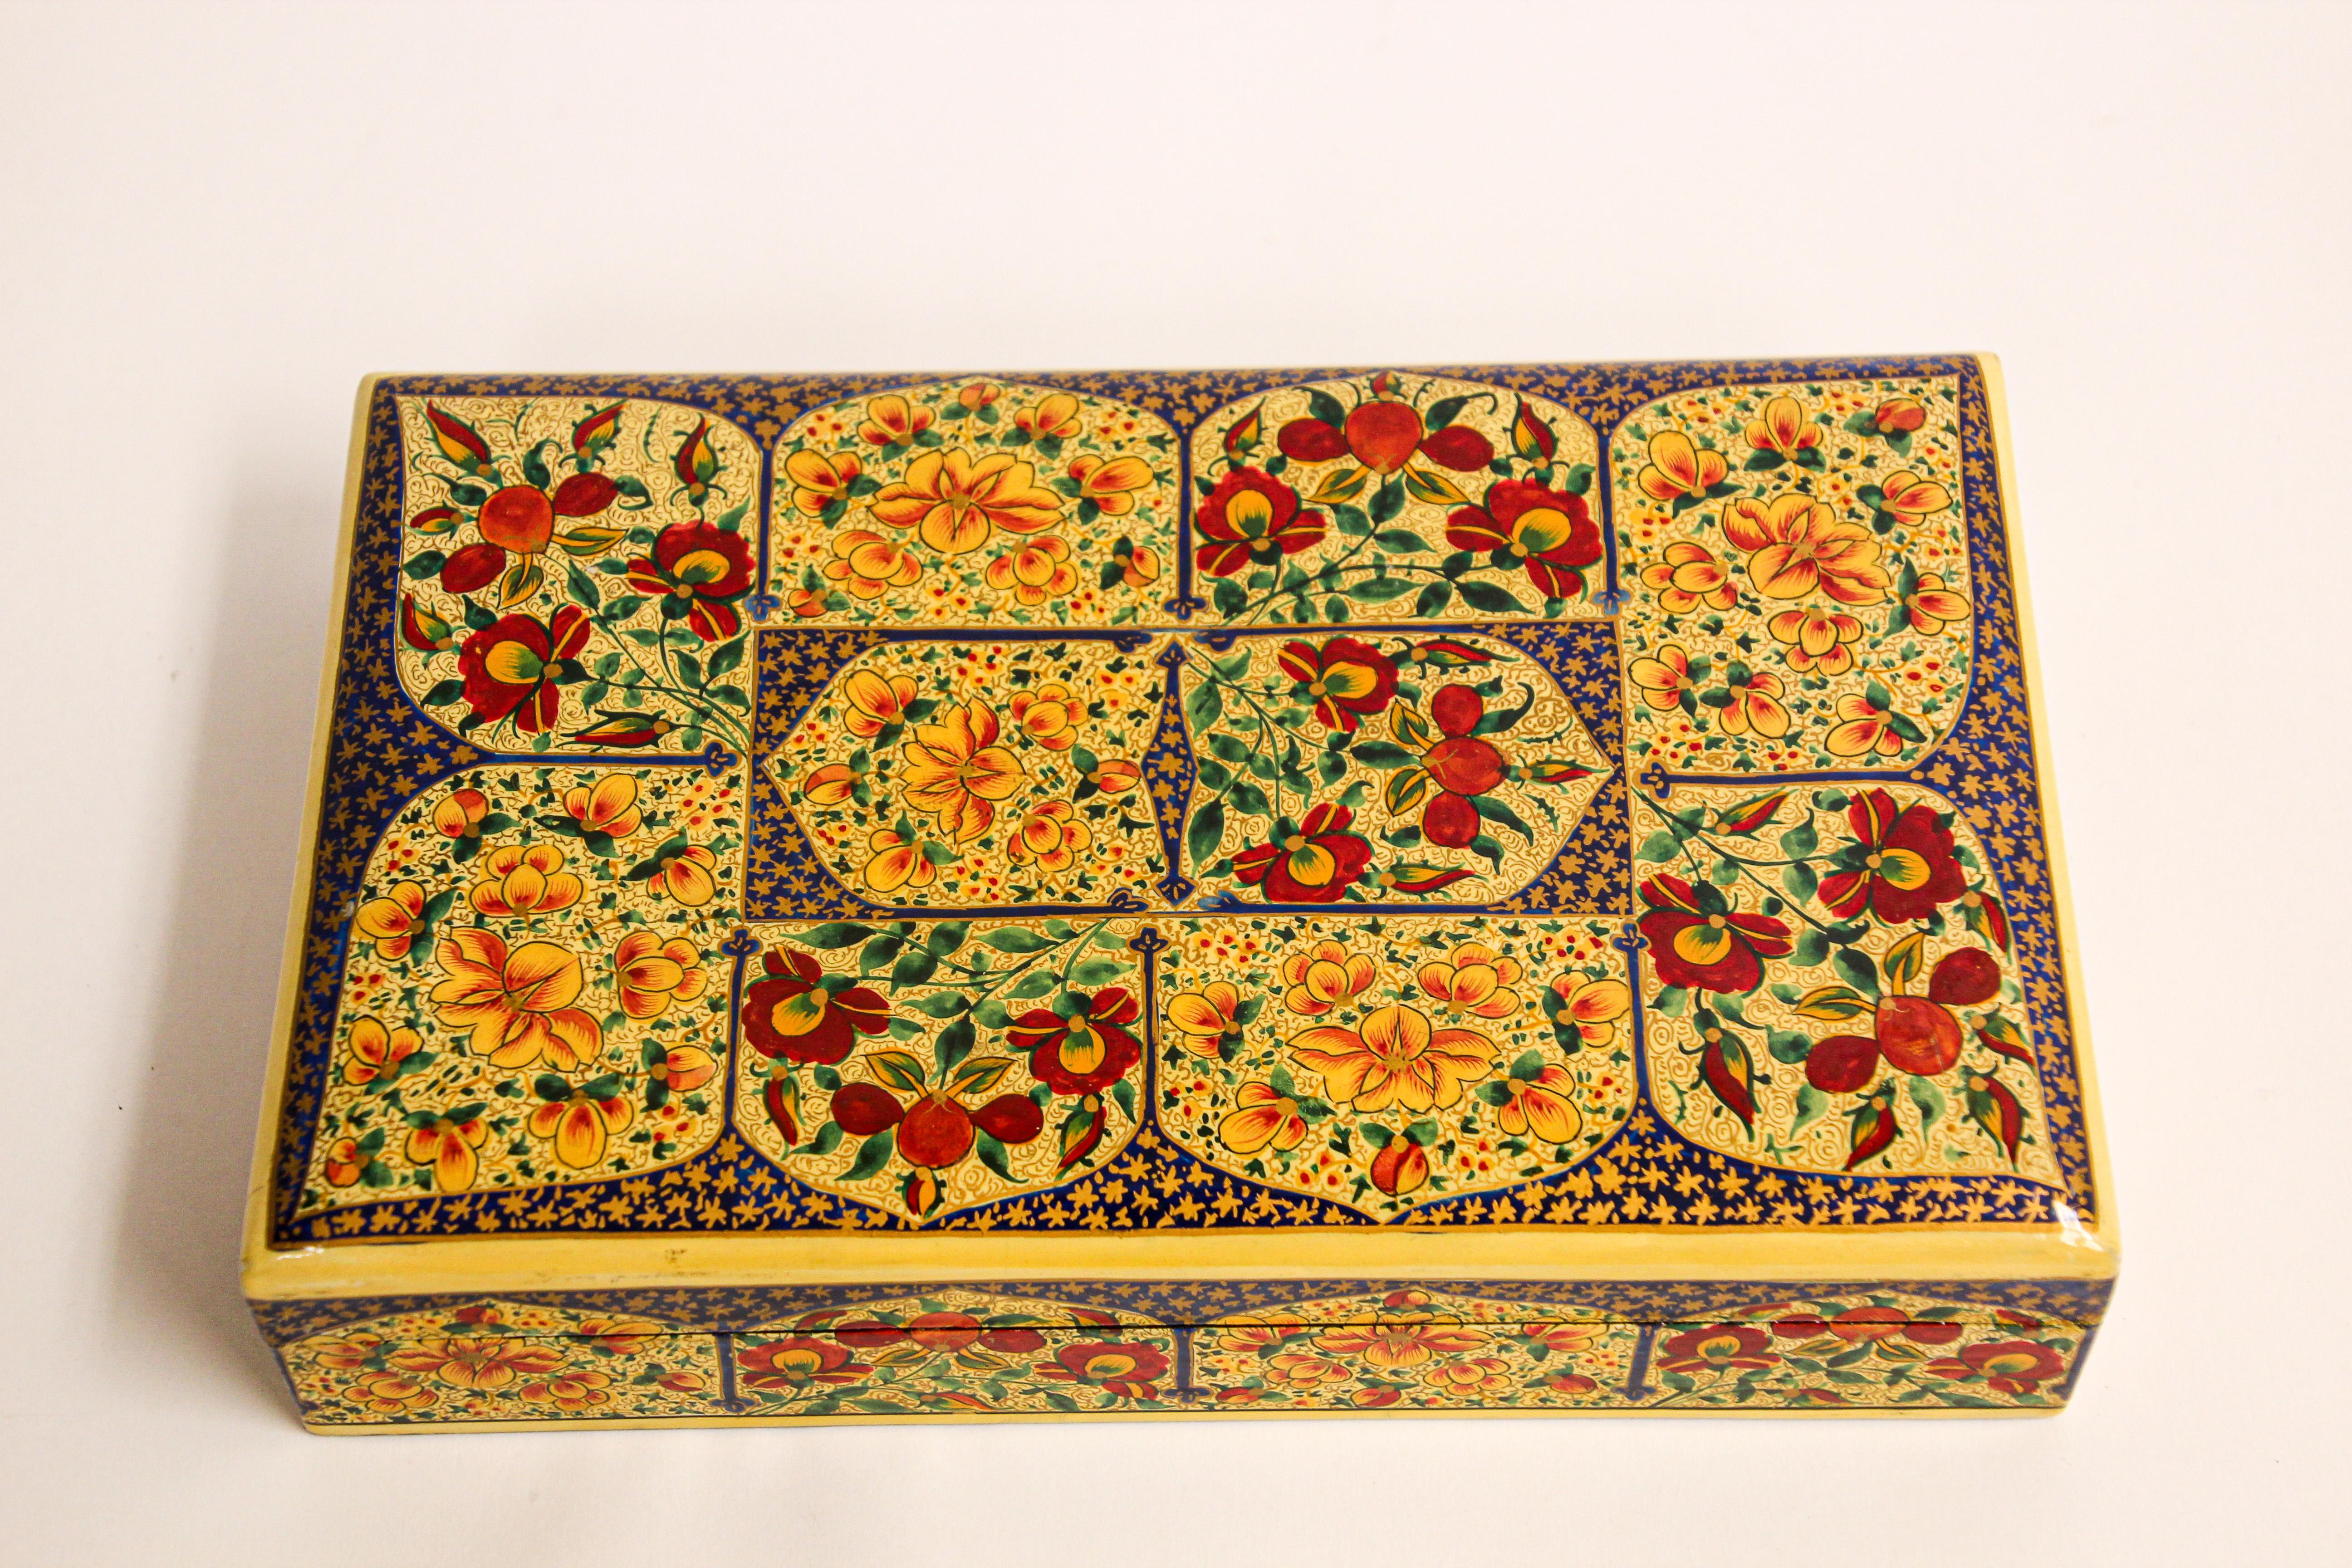 Moorish Hand Painted Rajasthani Lacquer Decorative Box For Sale